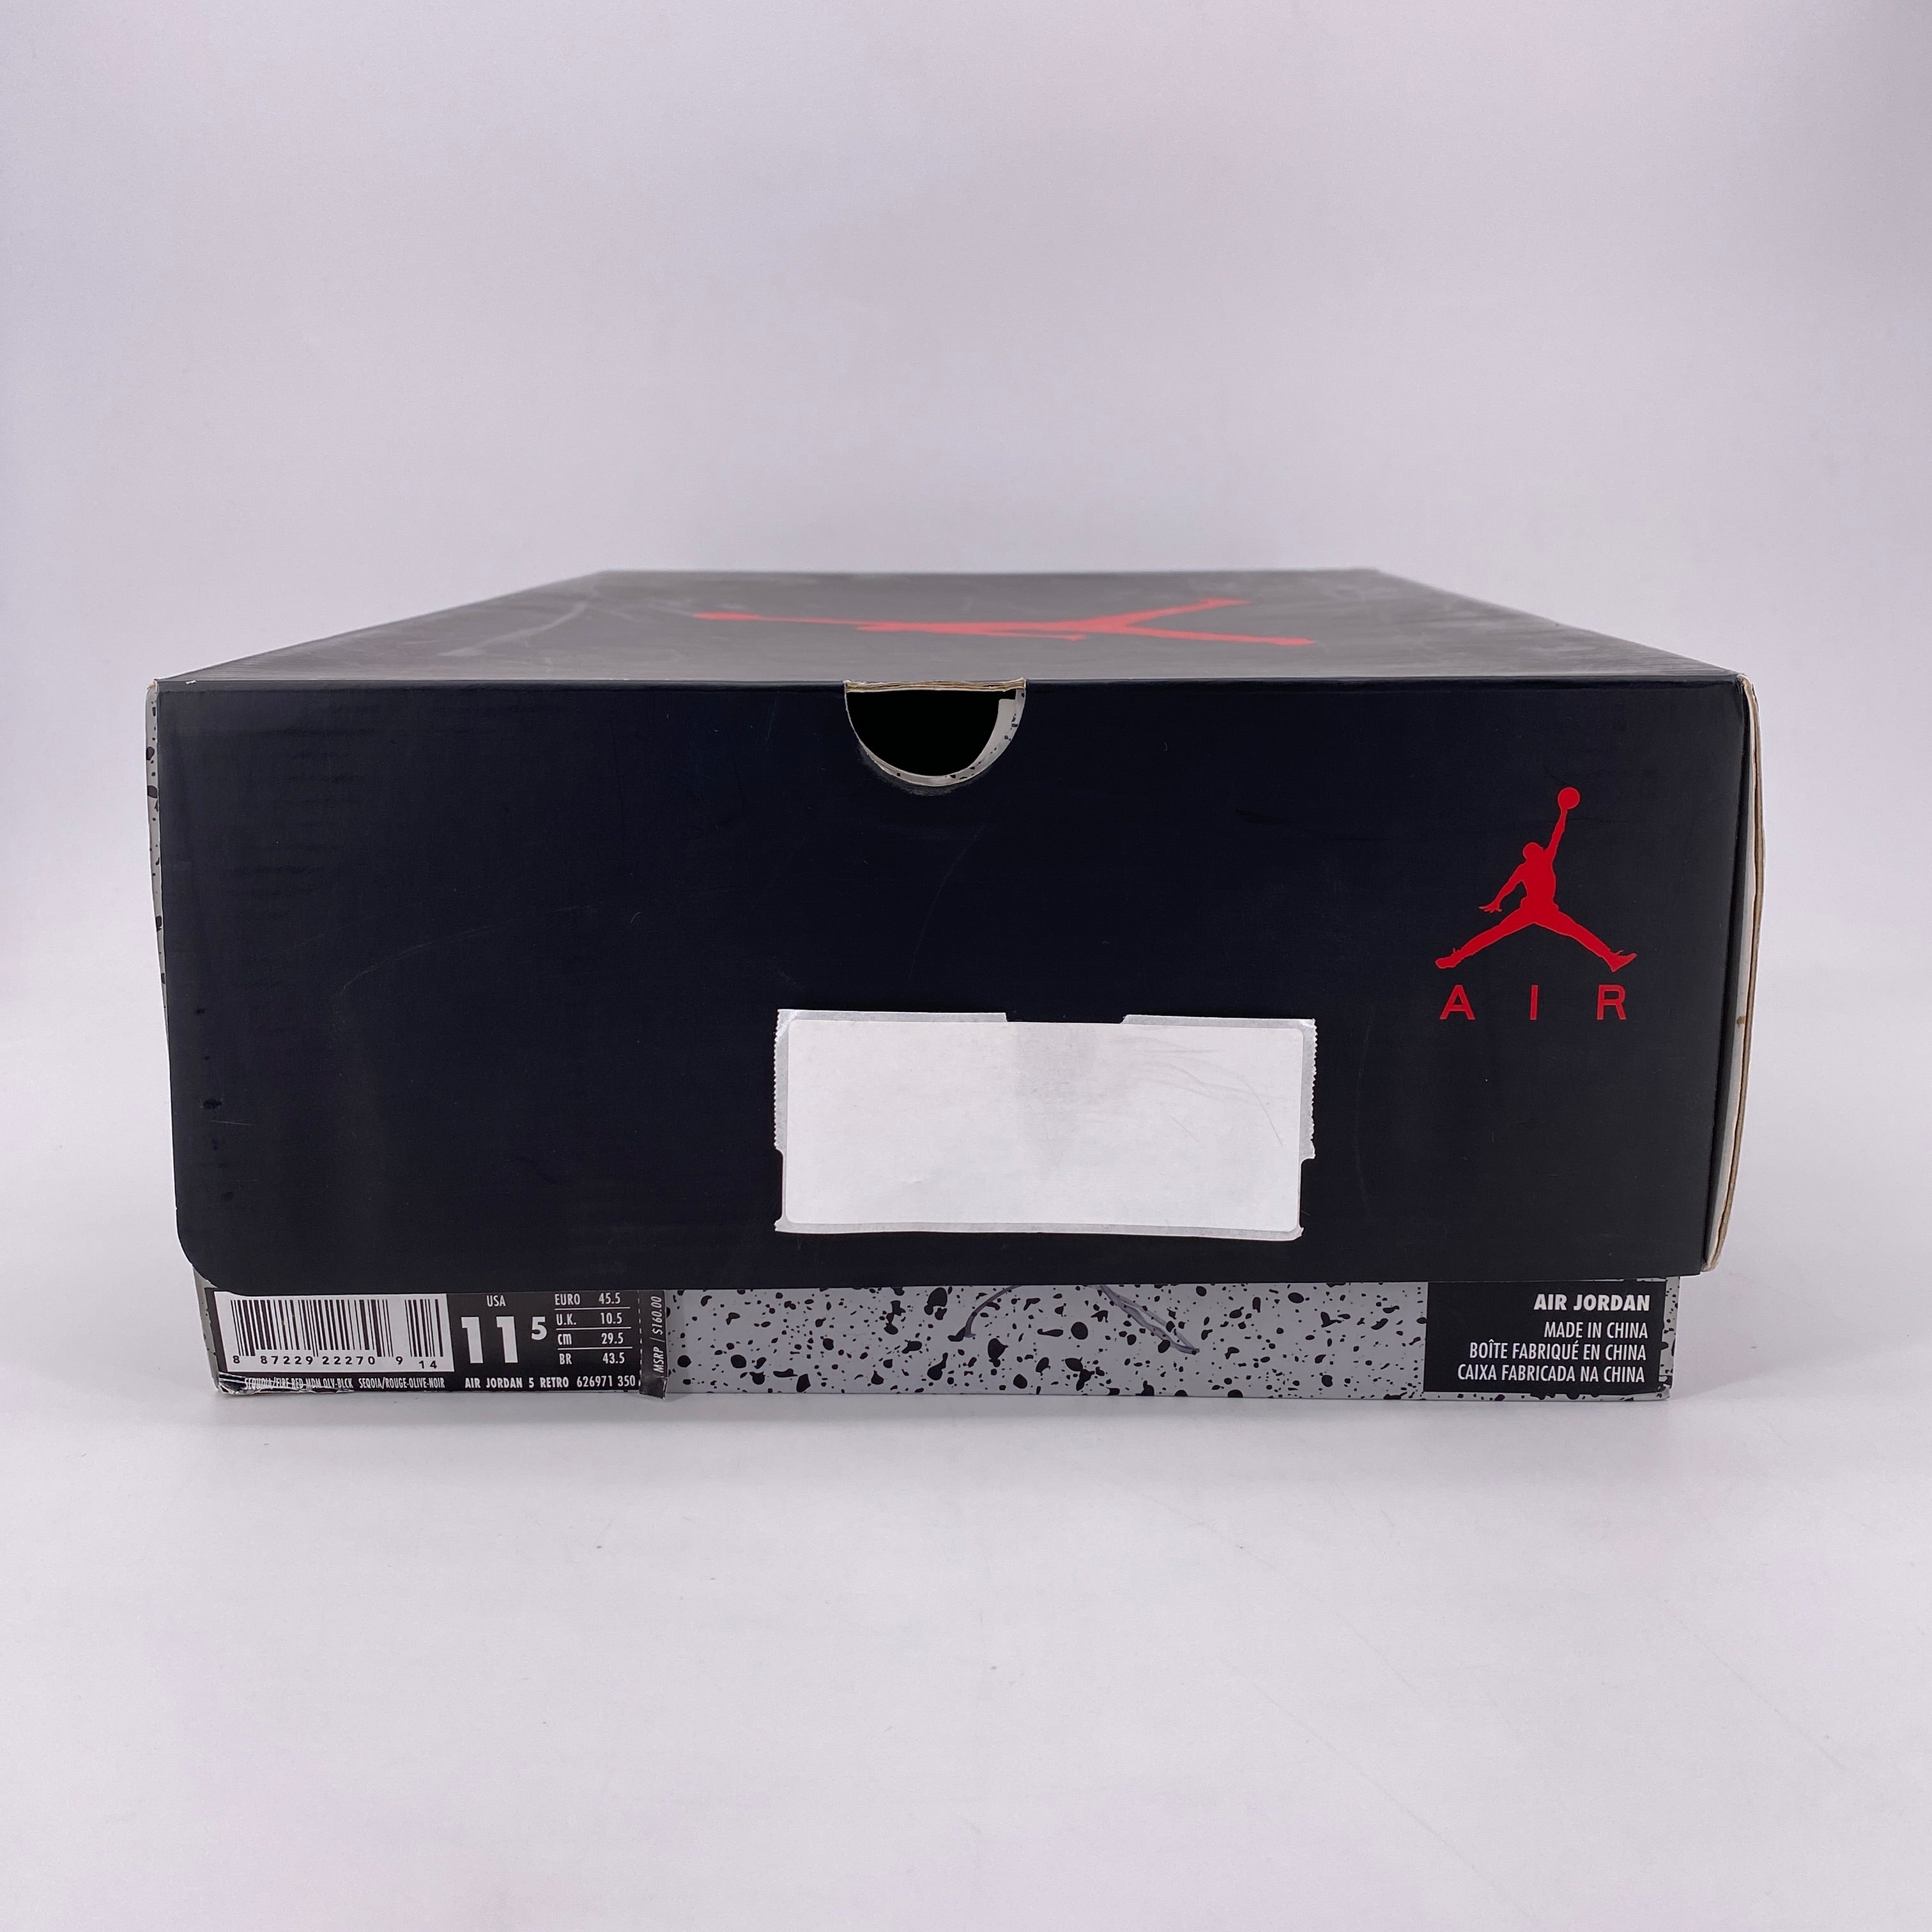 Air Jordan 5 Retro "Fear Pack" 2013 Used Size 11.5